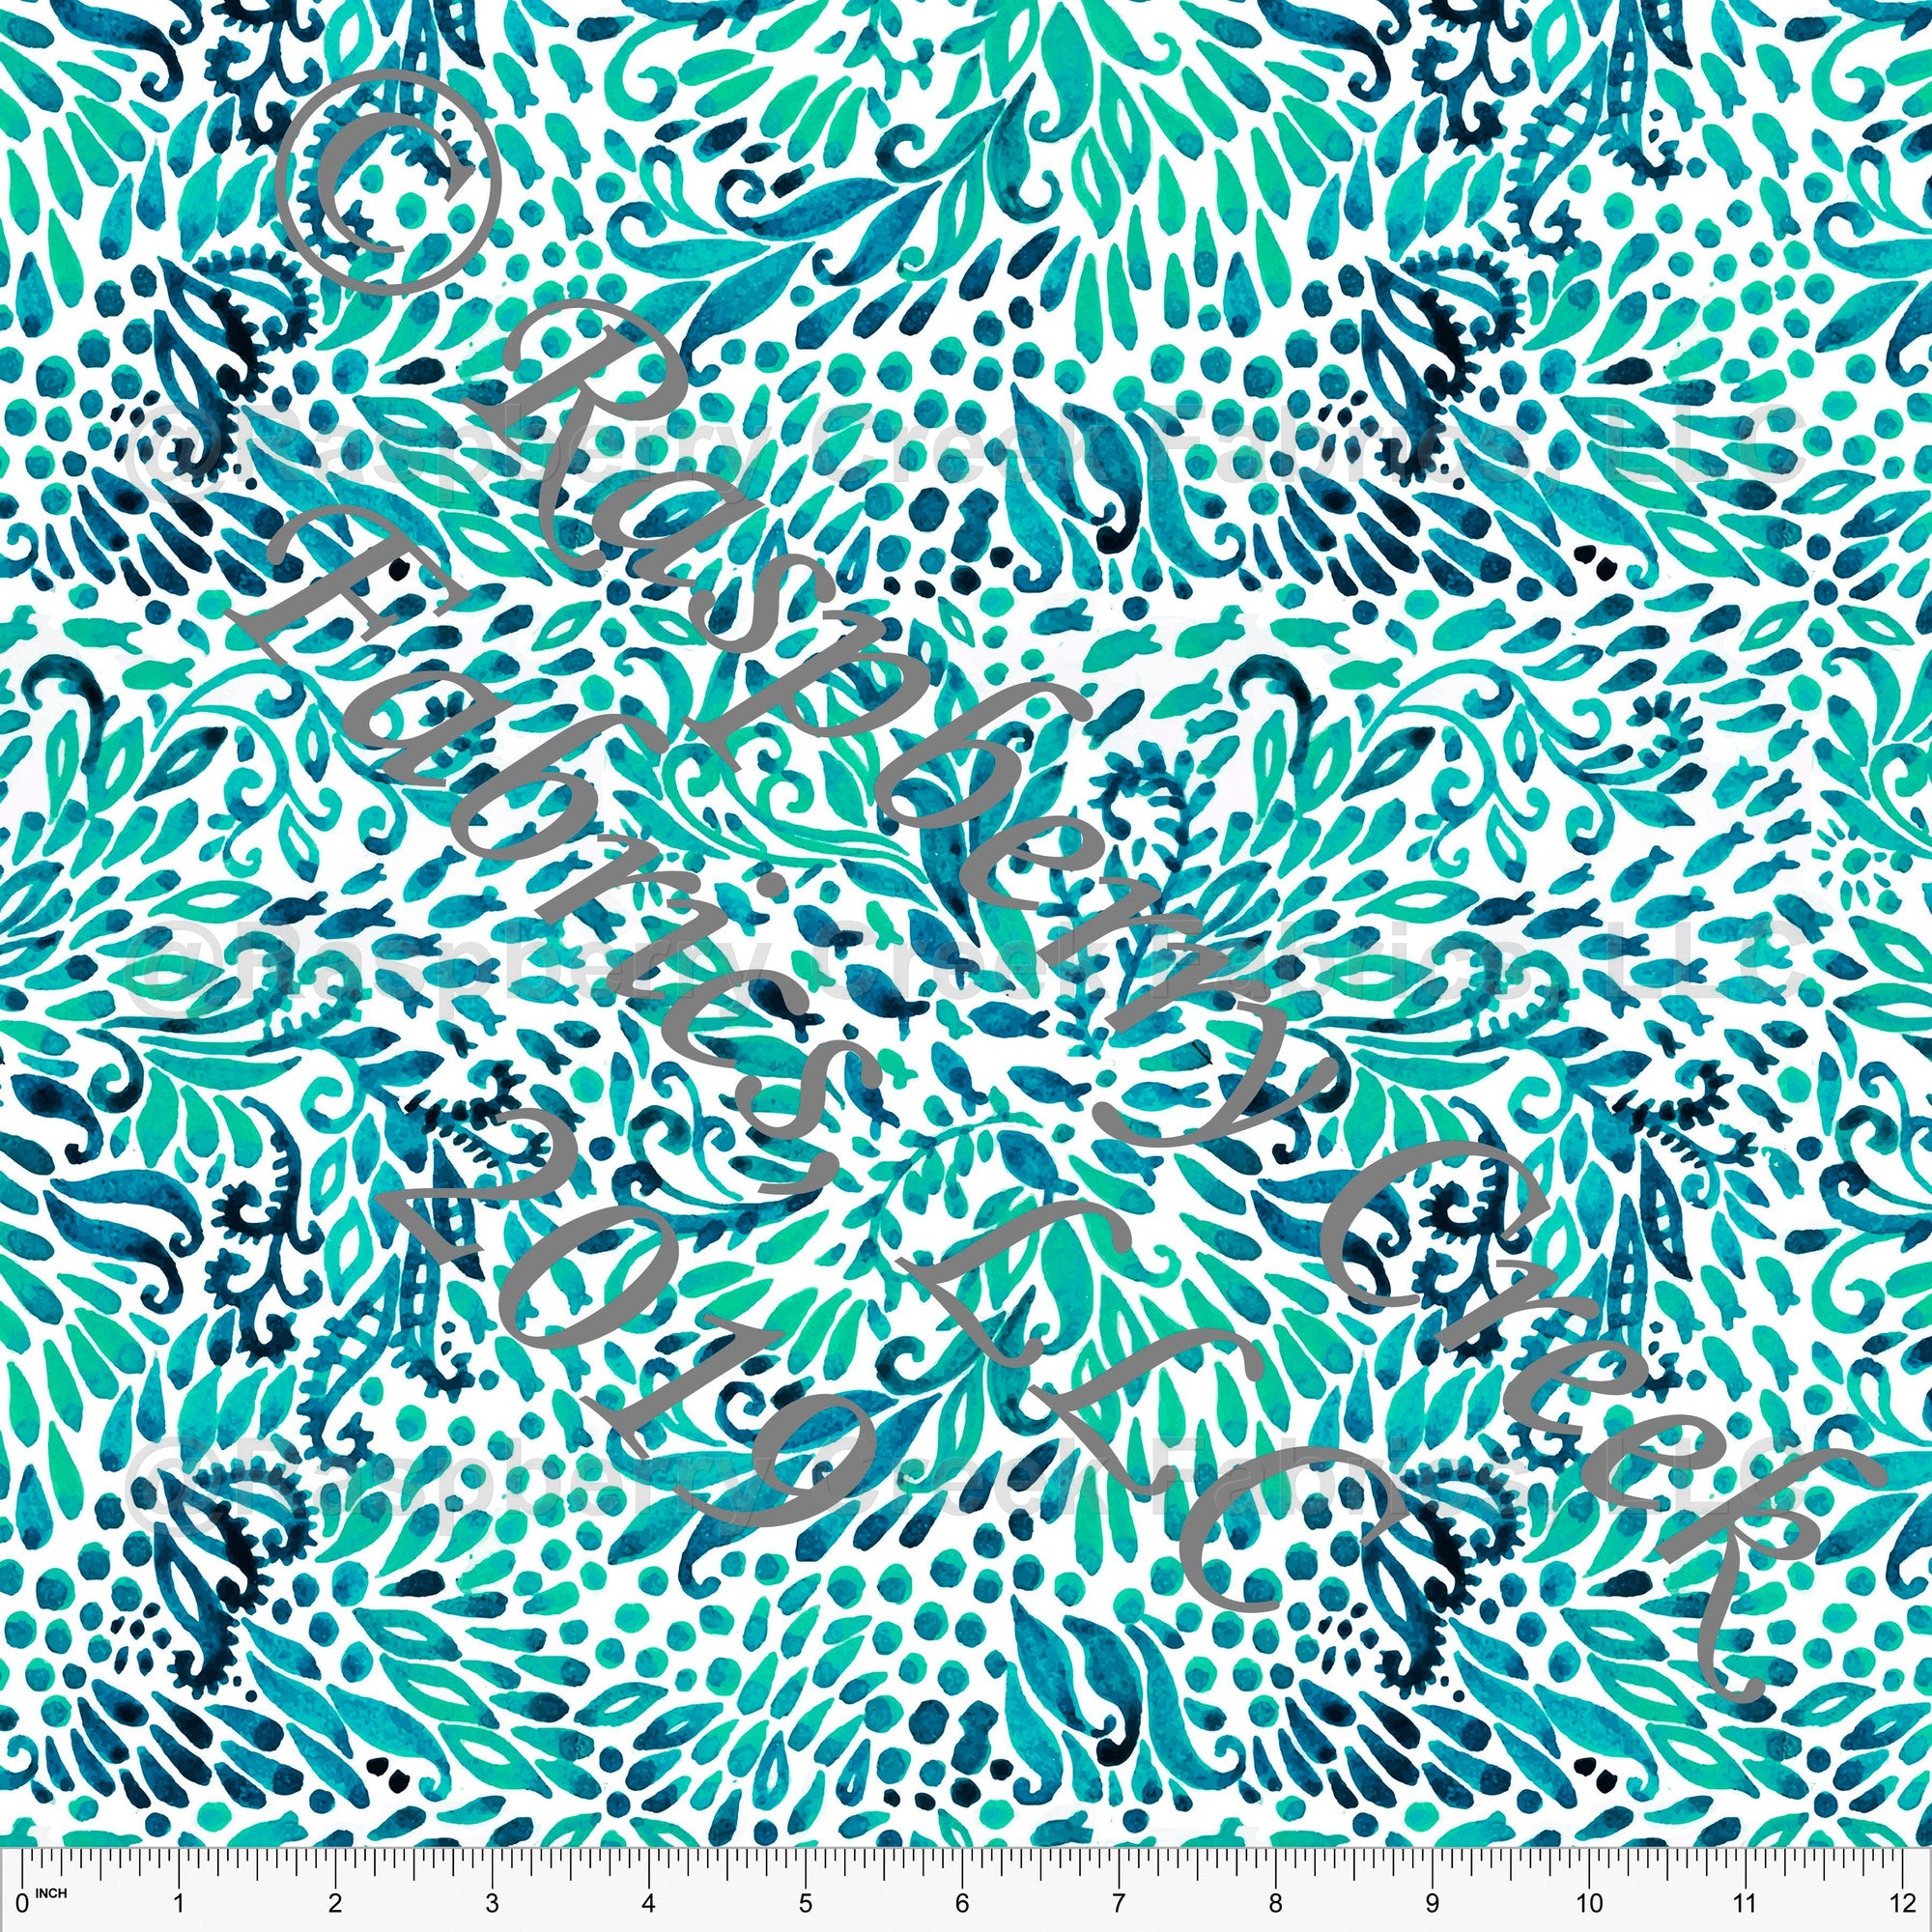 Navy Teal and Green Tonal Abstract Watercolor Seaweed Print Stretch Crepe Fabric, CLUB Fabrics Fabric, Raspberry Creek Fabrics, watermarked